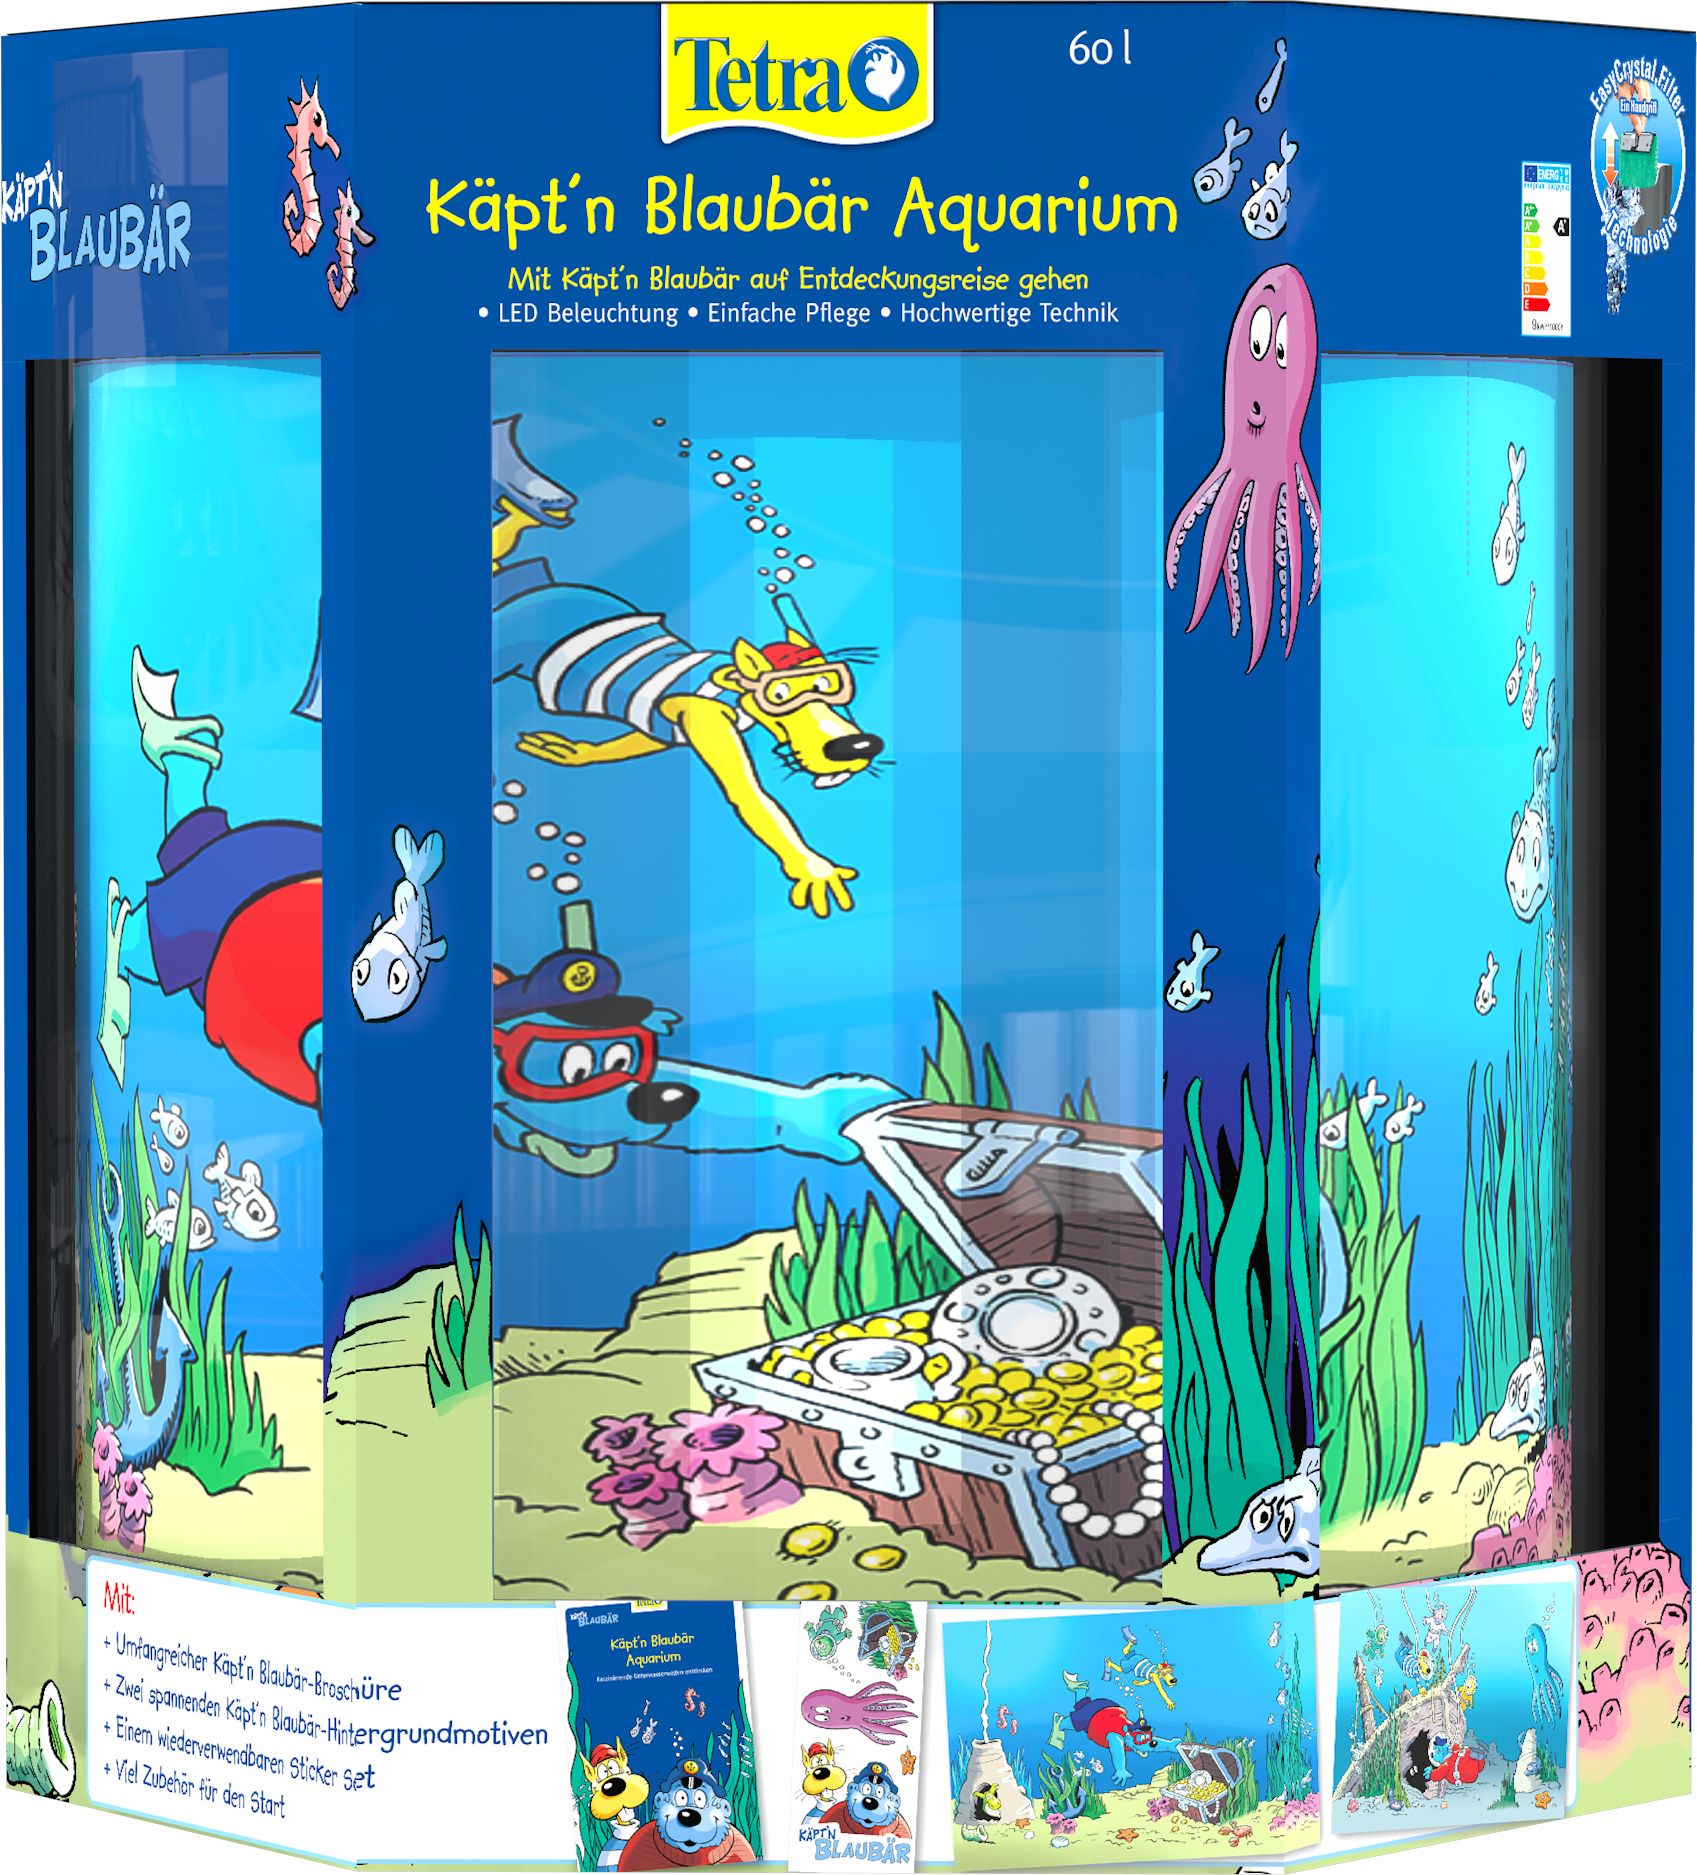 Käpt’n Blaubär Aquarium von Tetra